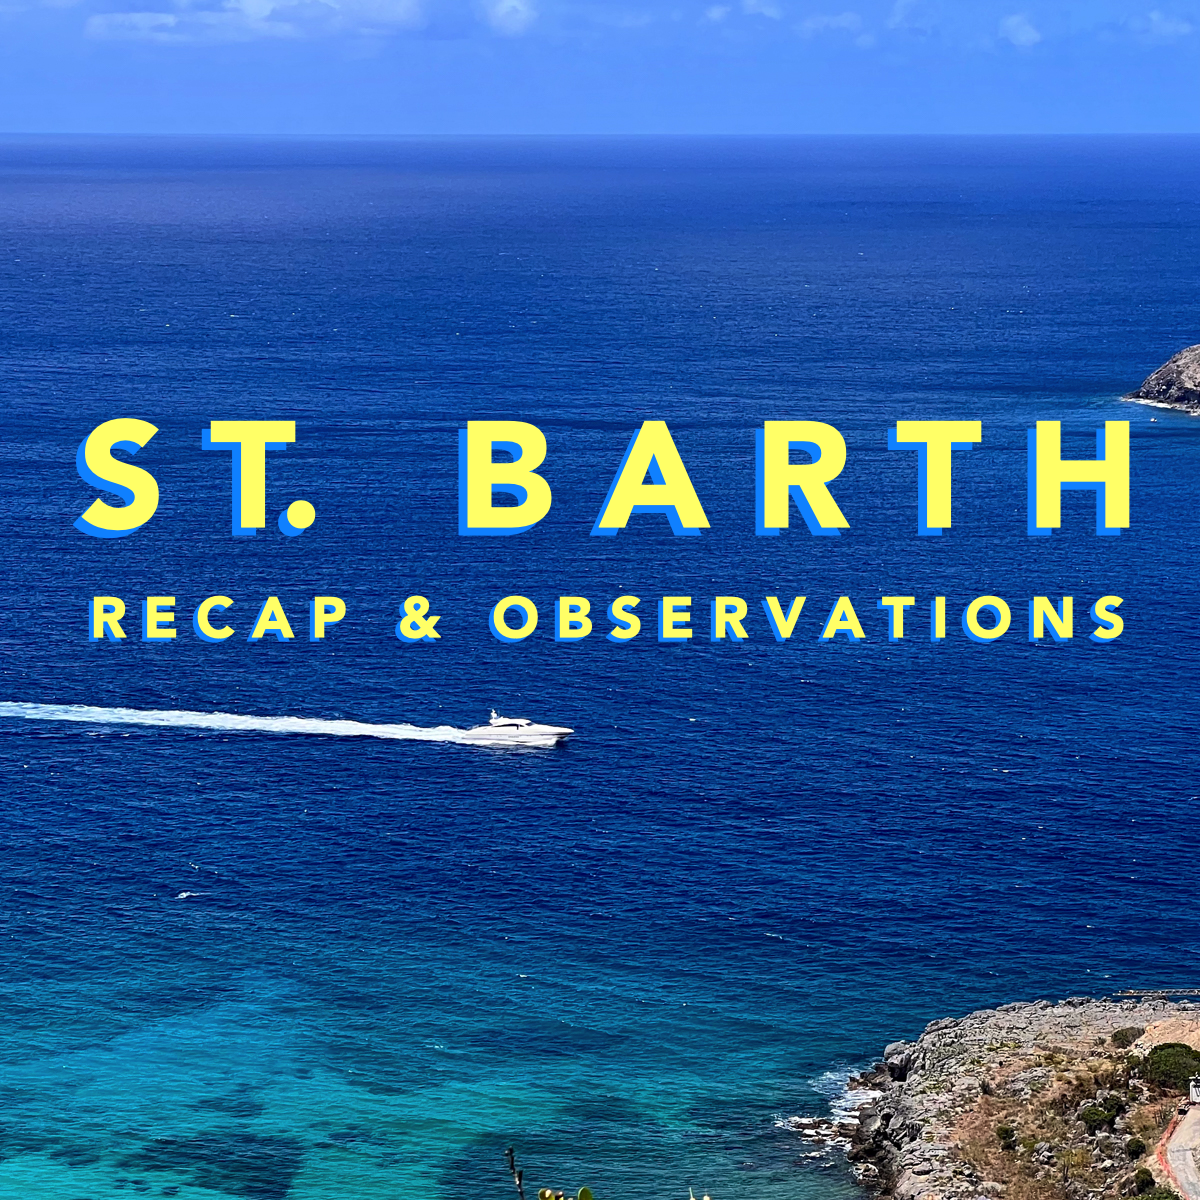 On St. Barths: Alone on Gouverneur Beach